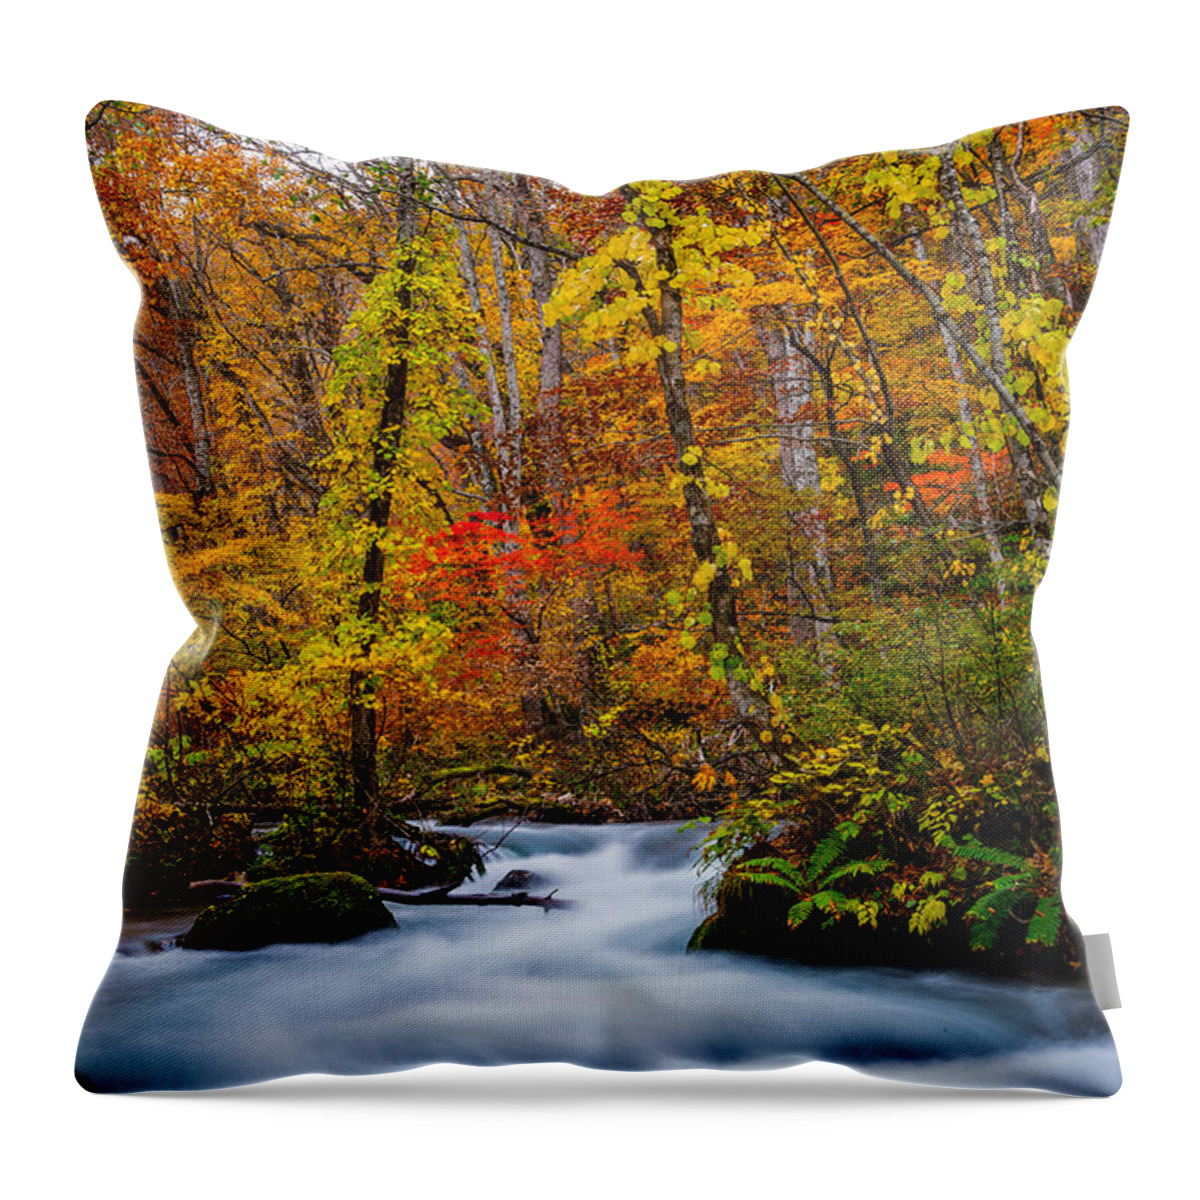 Oirase Fall Color Throw Pillow featuring the photograph Fall color - Oirase stream by Hisao Mogi